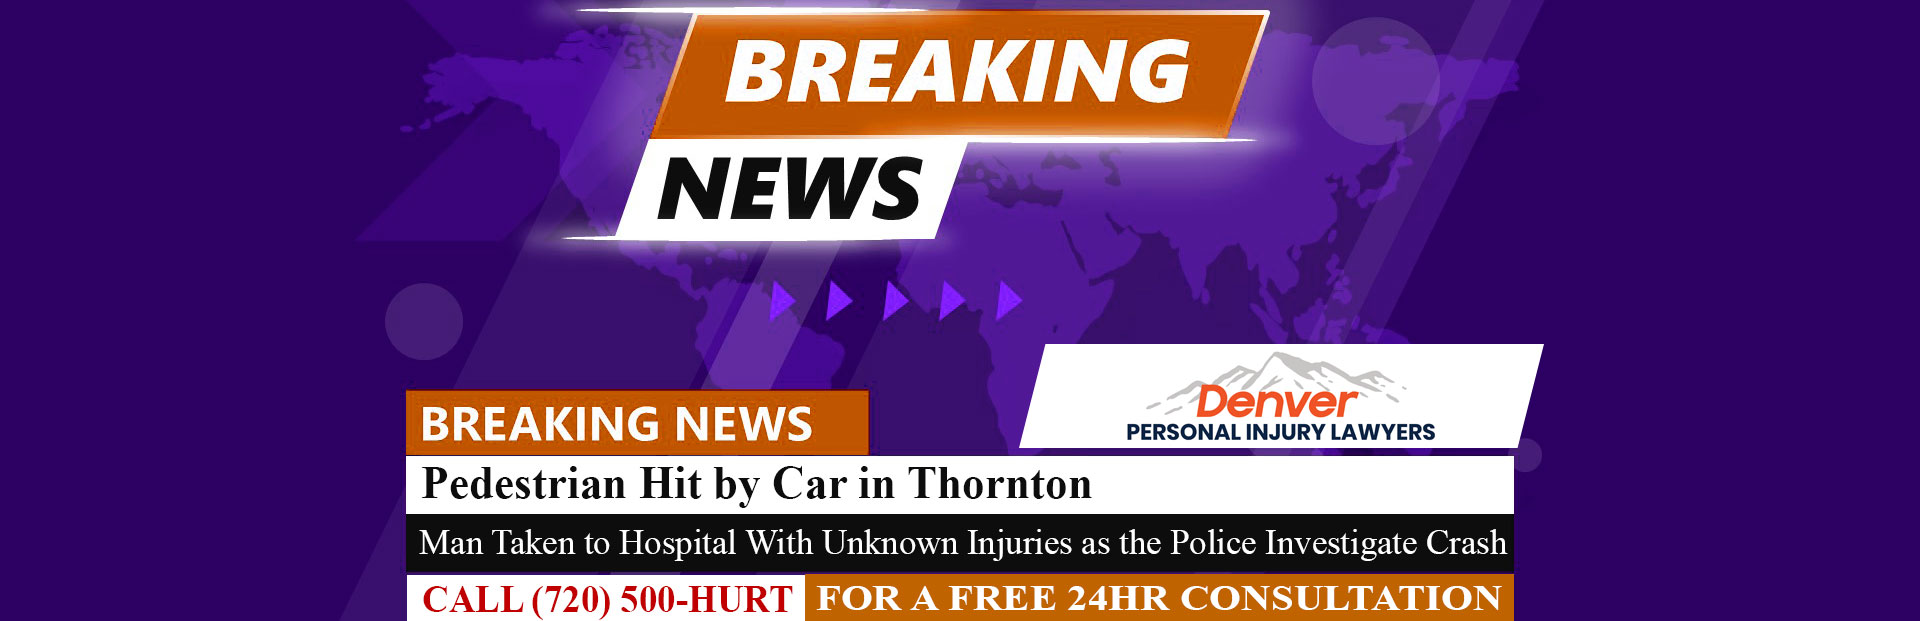 [5-4-22] Pedestrian Hit by Car in Thornton